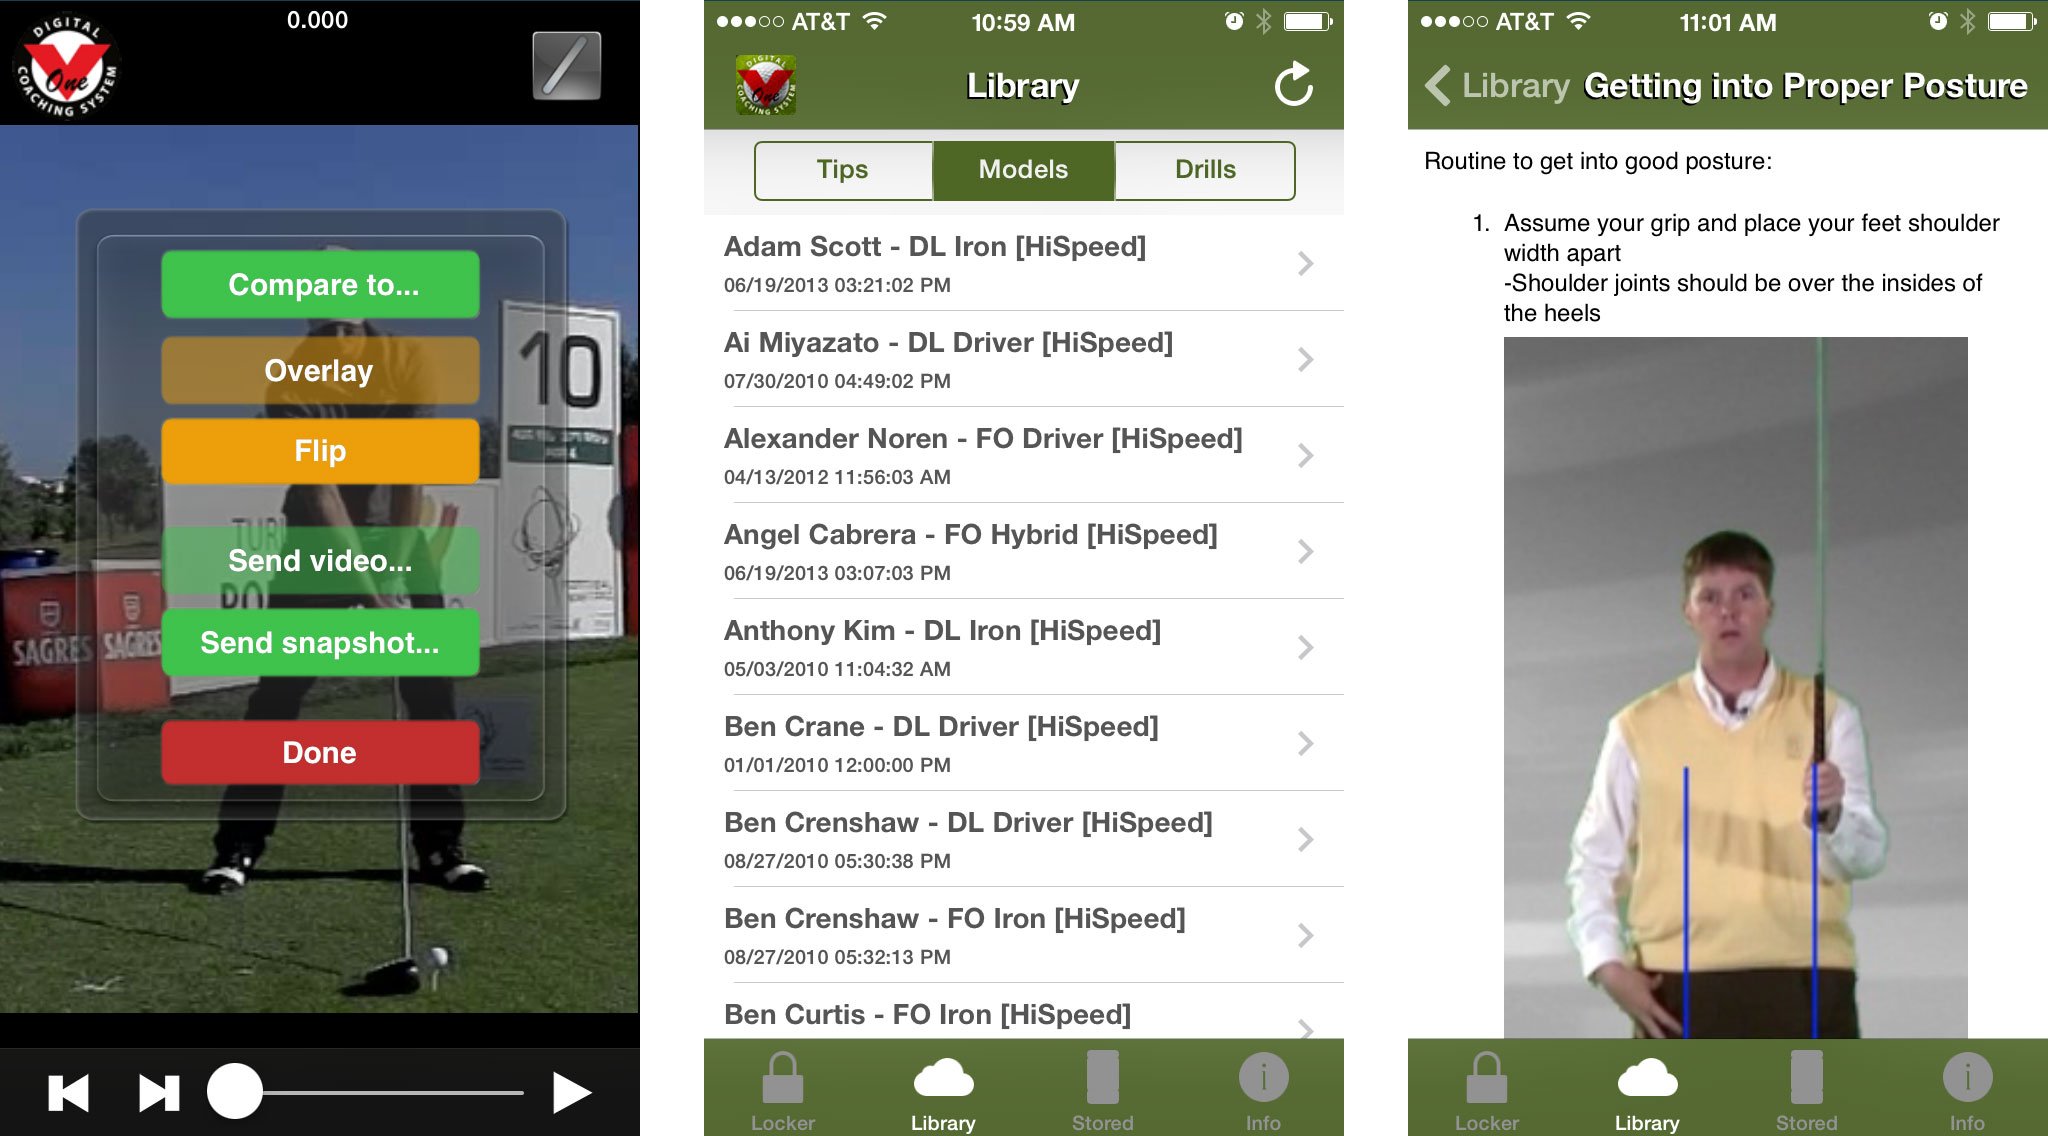 Best golfing apps for iPhone: V1 Golf